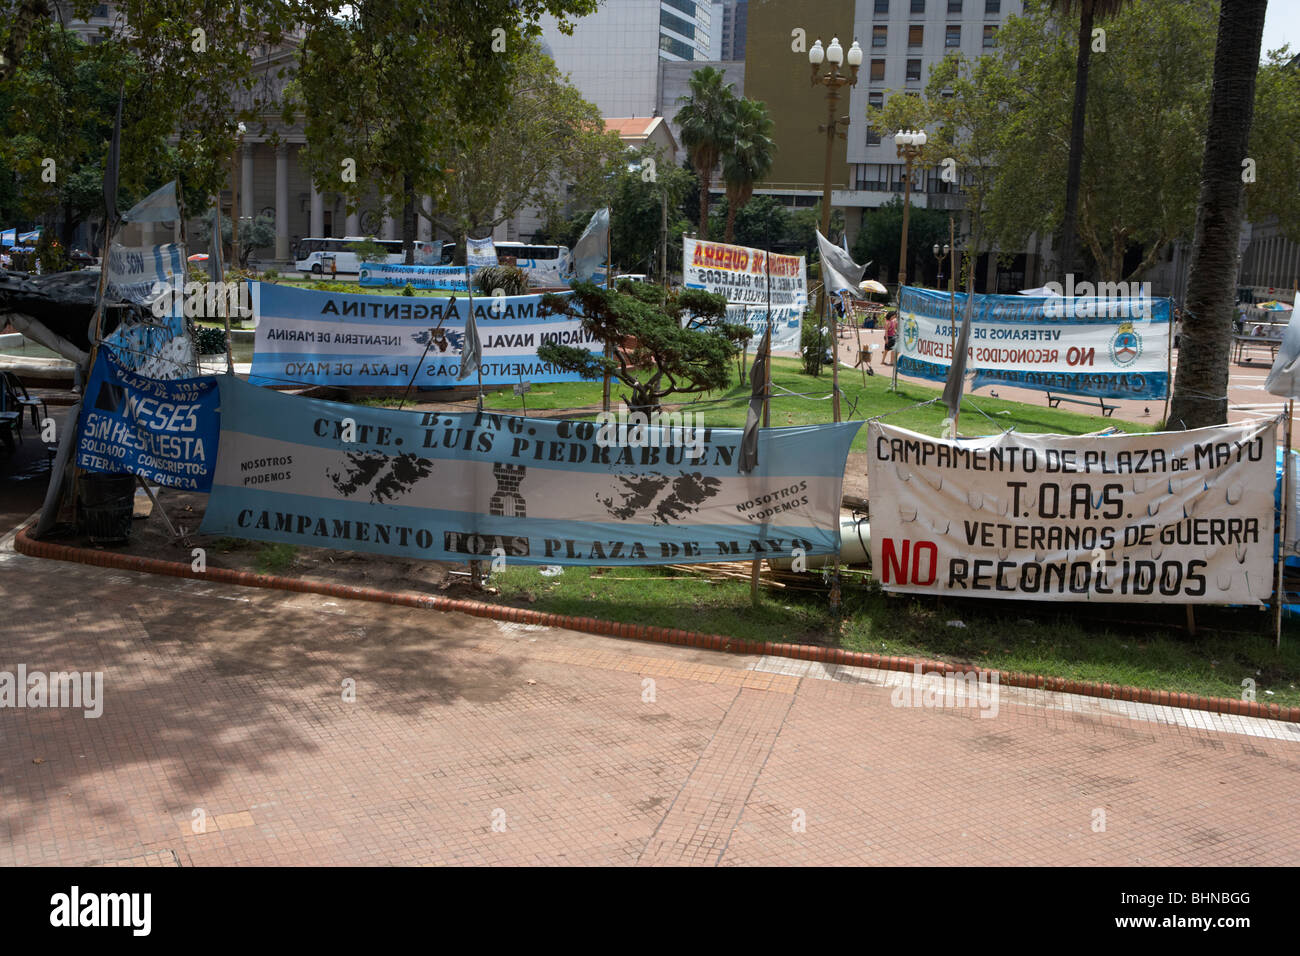 Las Malvinas Veterans Memorial protesta plaza de mayo buenos aires repubblica di Argentina sud america Foto Stock